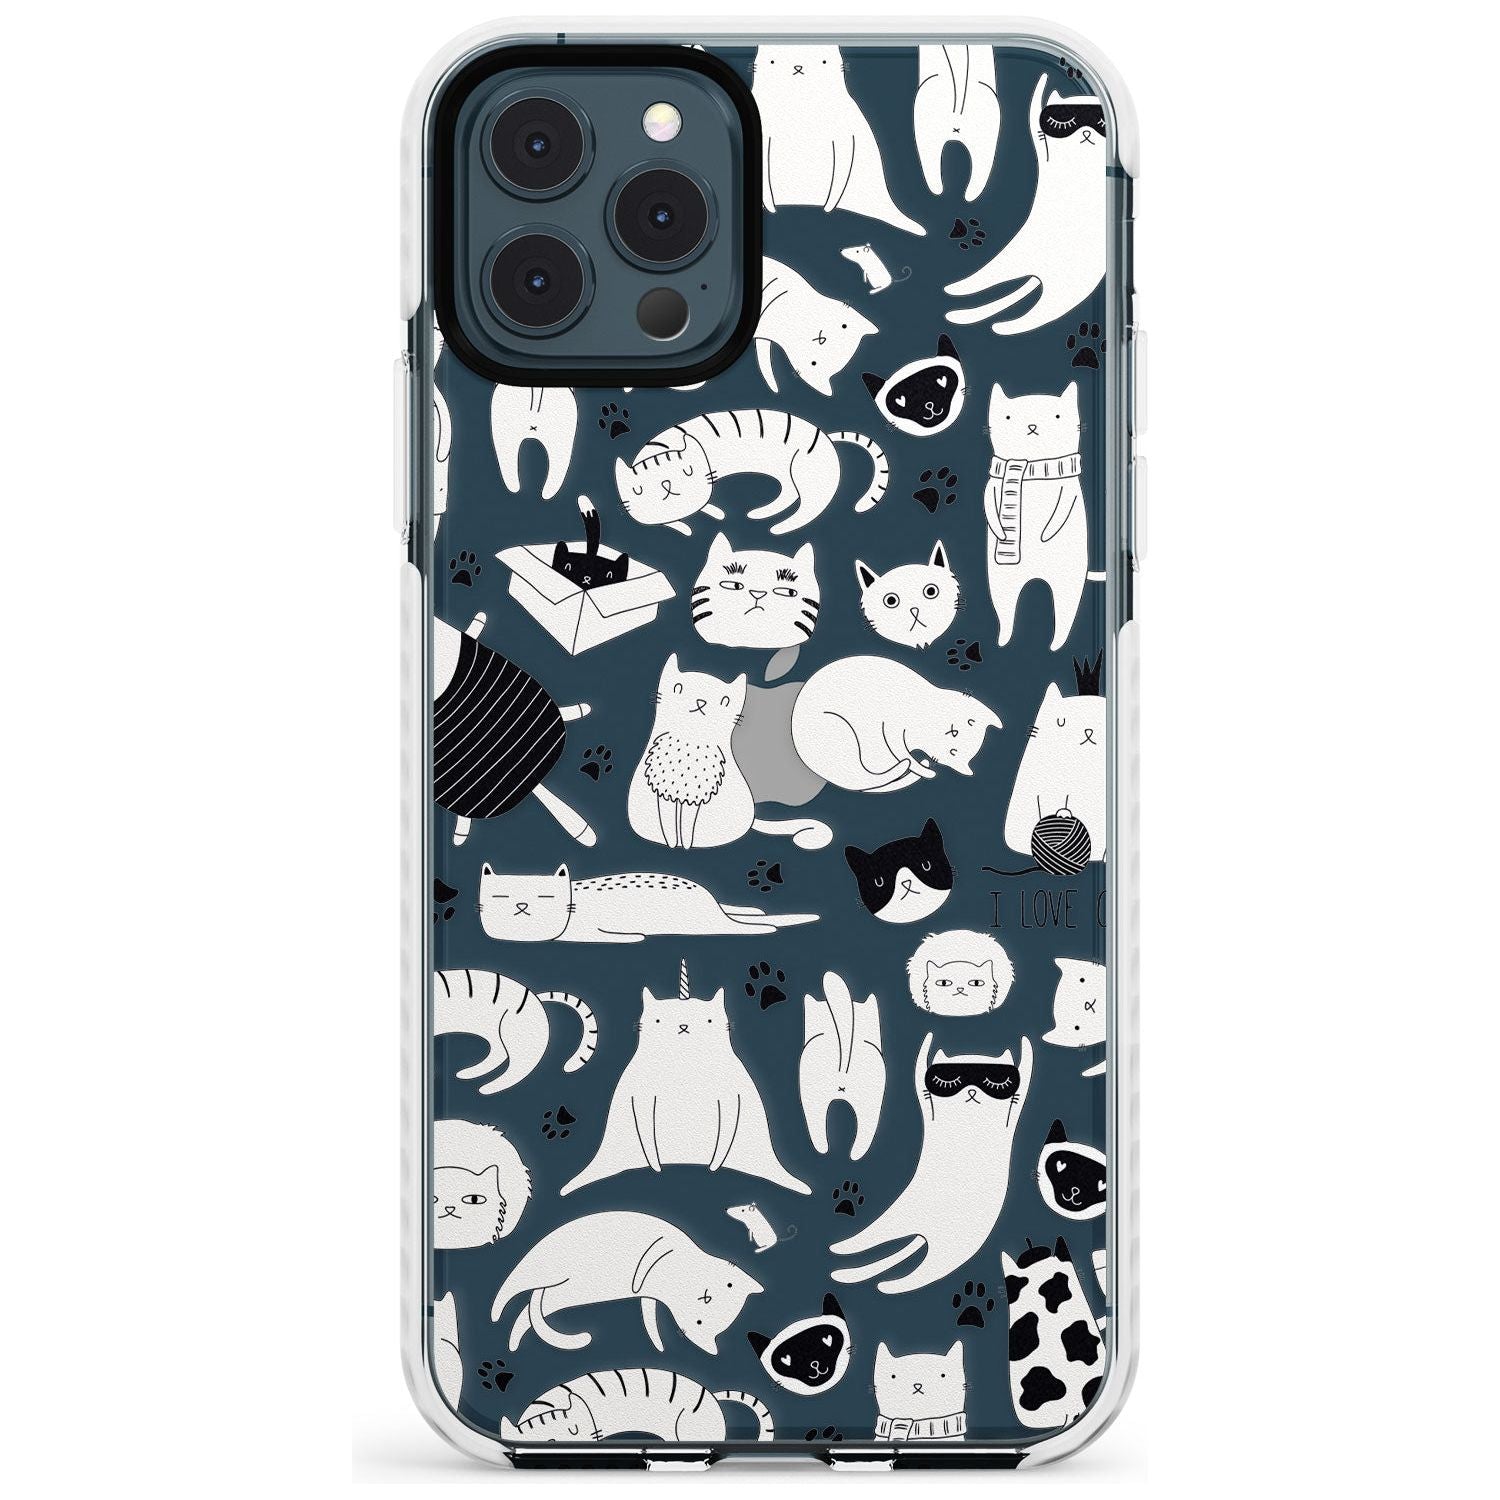 Cartoon Cat Collage - Black & White Slim TPU Phone Case for iPhone 11 Pro Max